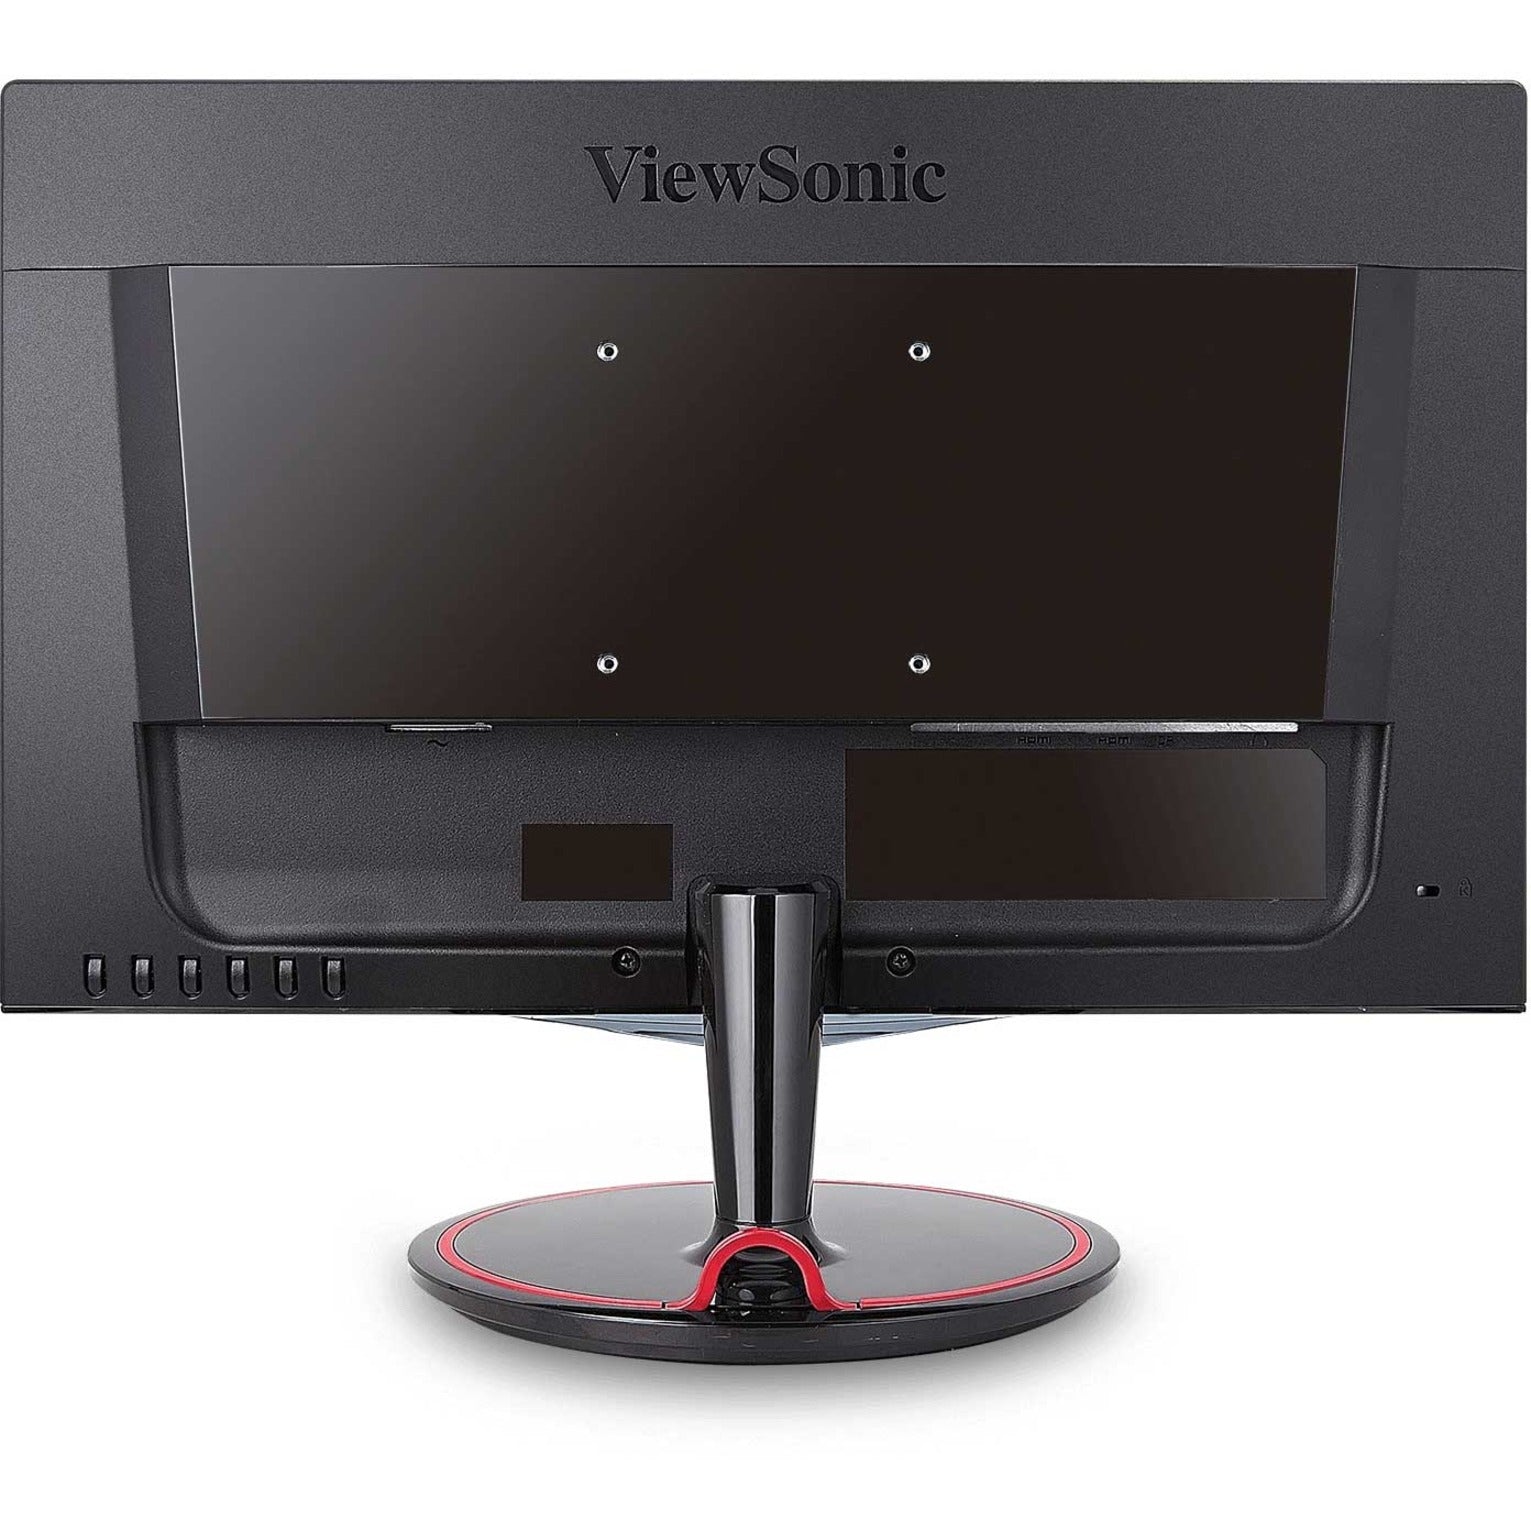 ViewSonic VX2458-MHD Gaming Monitor, 24" Full HD, 144Hz, AMD FreeSync, Black Red